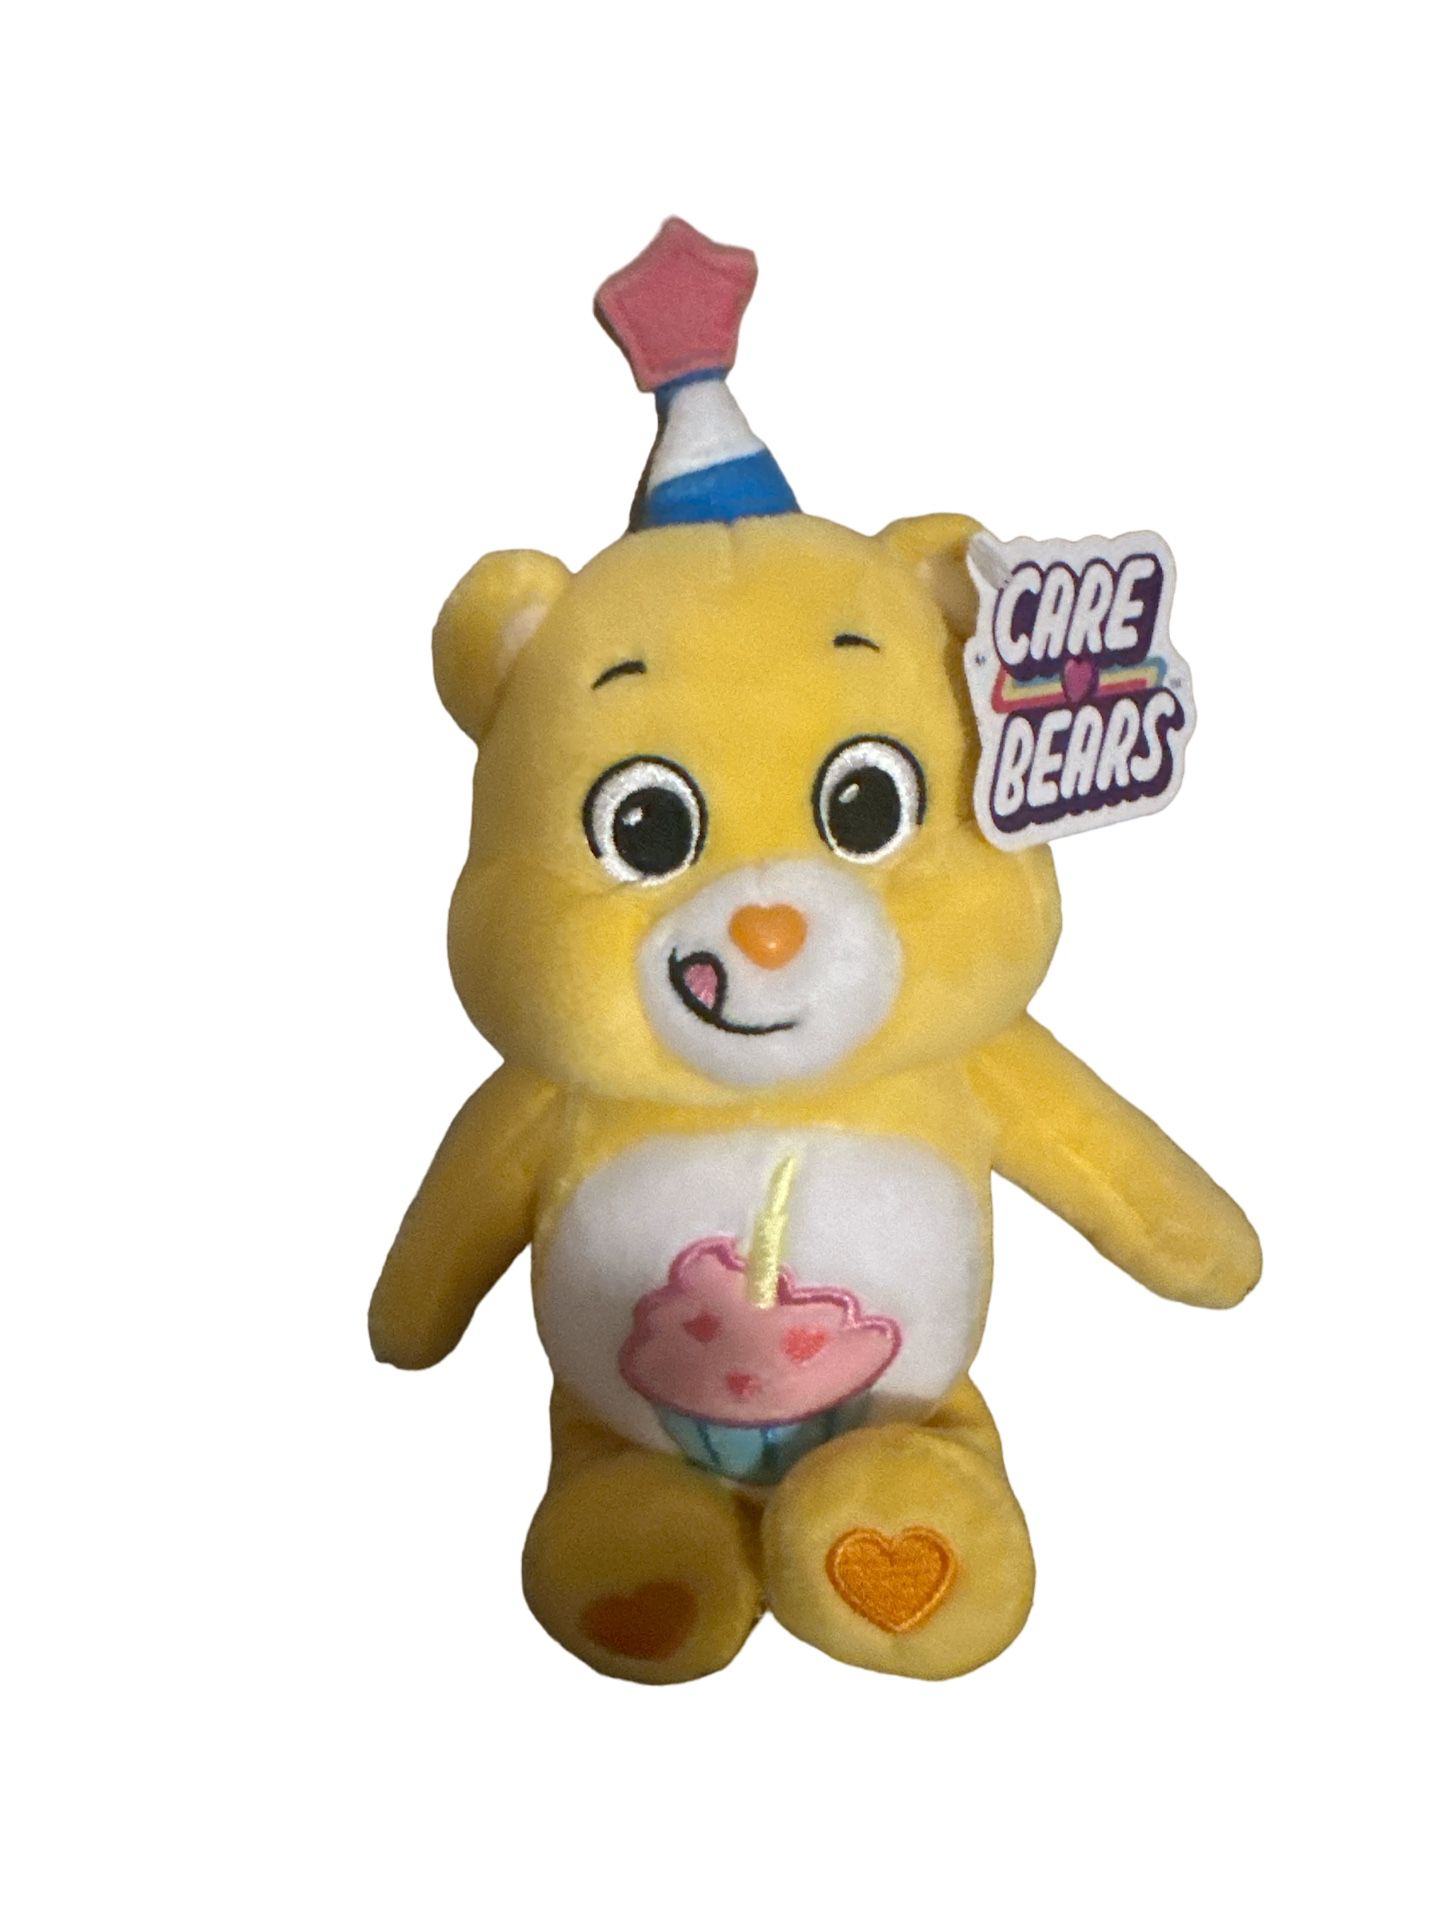 Care Bears 9" Bean Plush (Glitter Belly) - Birthday Bear - Soft Huggable Material! No original box